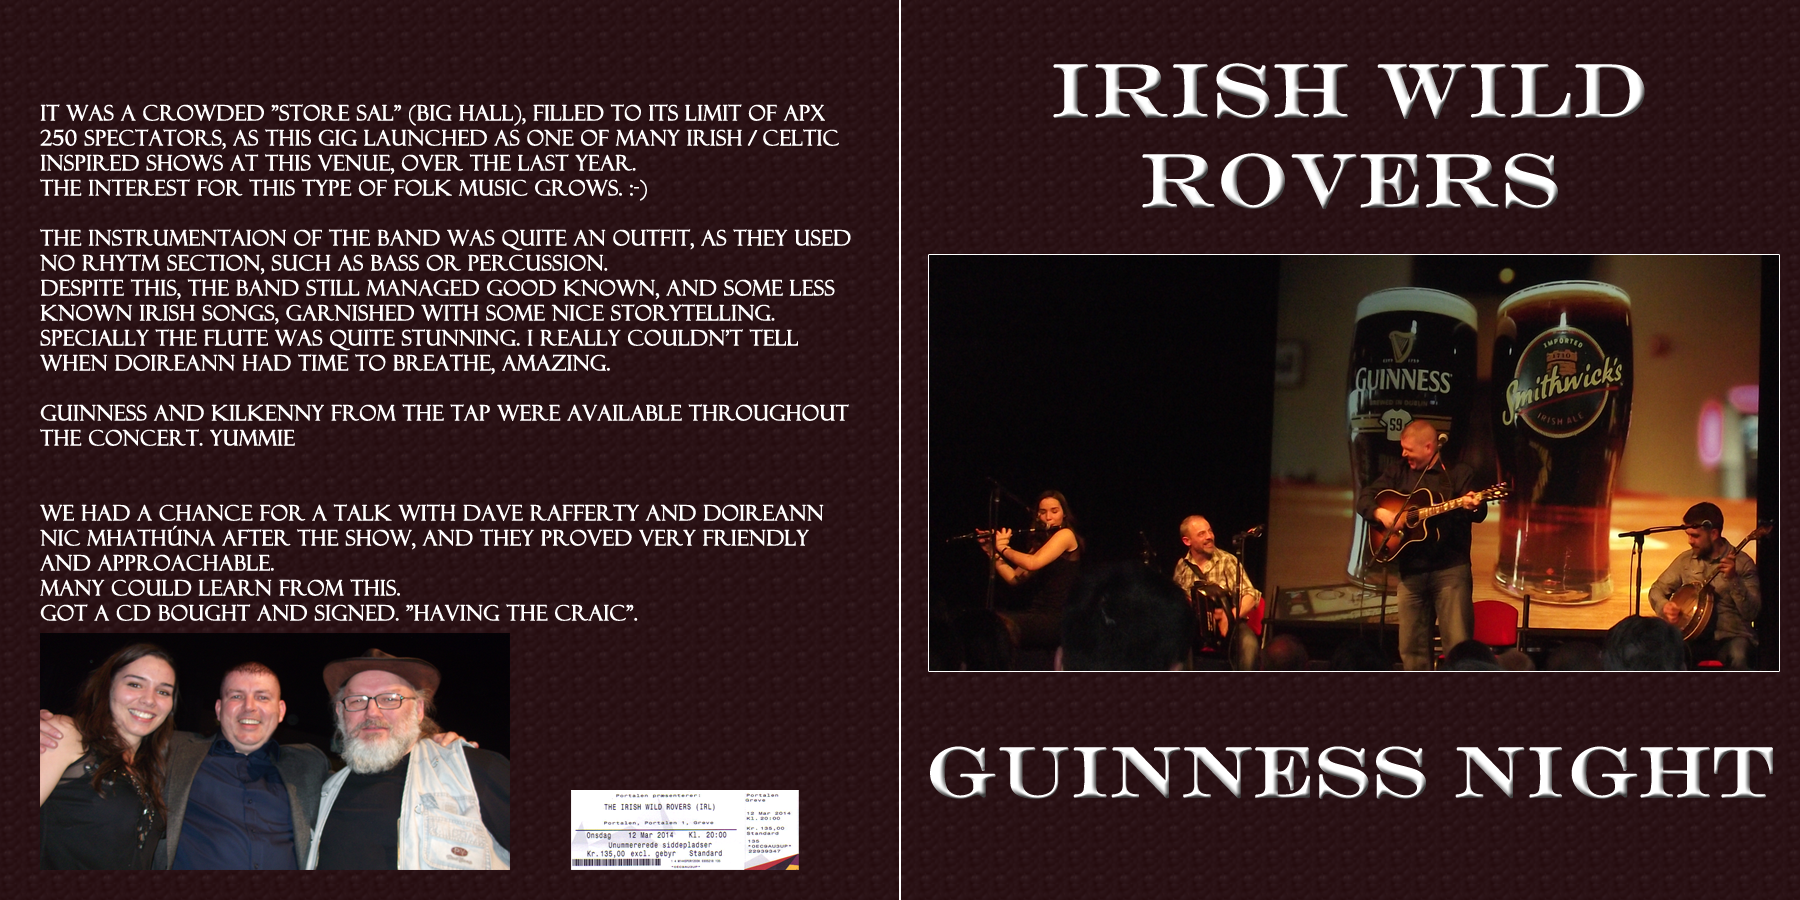 IrishWildRovers2014-03-12StoreSalPortalenHundigeDenmark (1).png